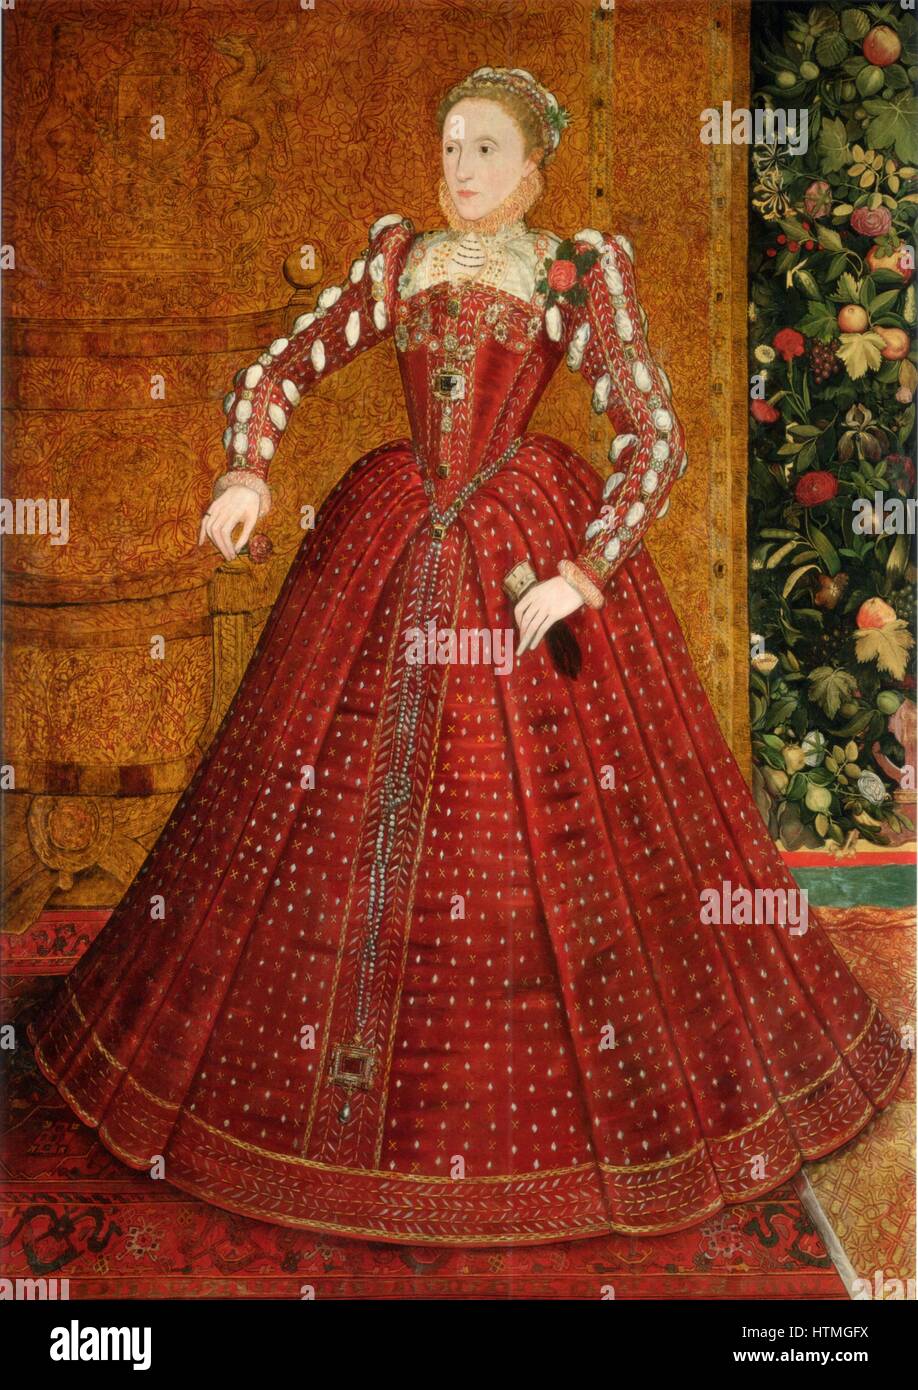 Isabel I (1533-1603), reina de Inglaterra e Irlanda desde 1558. Hampden retrato. Retrato de longitud completa de la joven reina. Óleo sobre lienzo de mediados a finales de 1660. Foto de stock